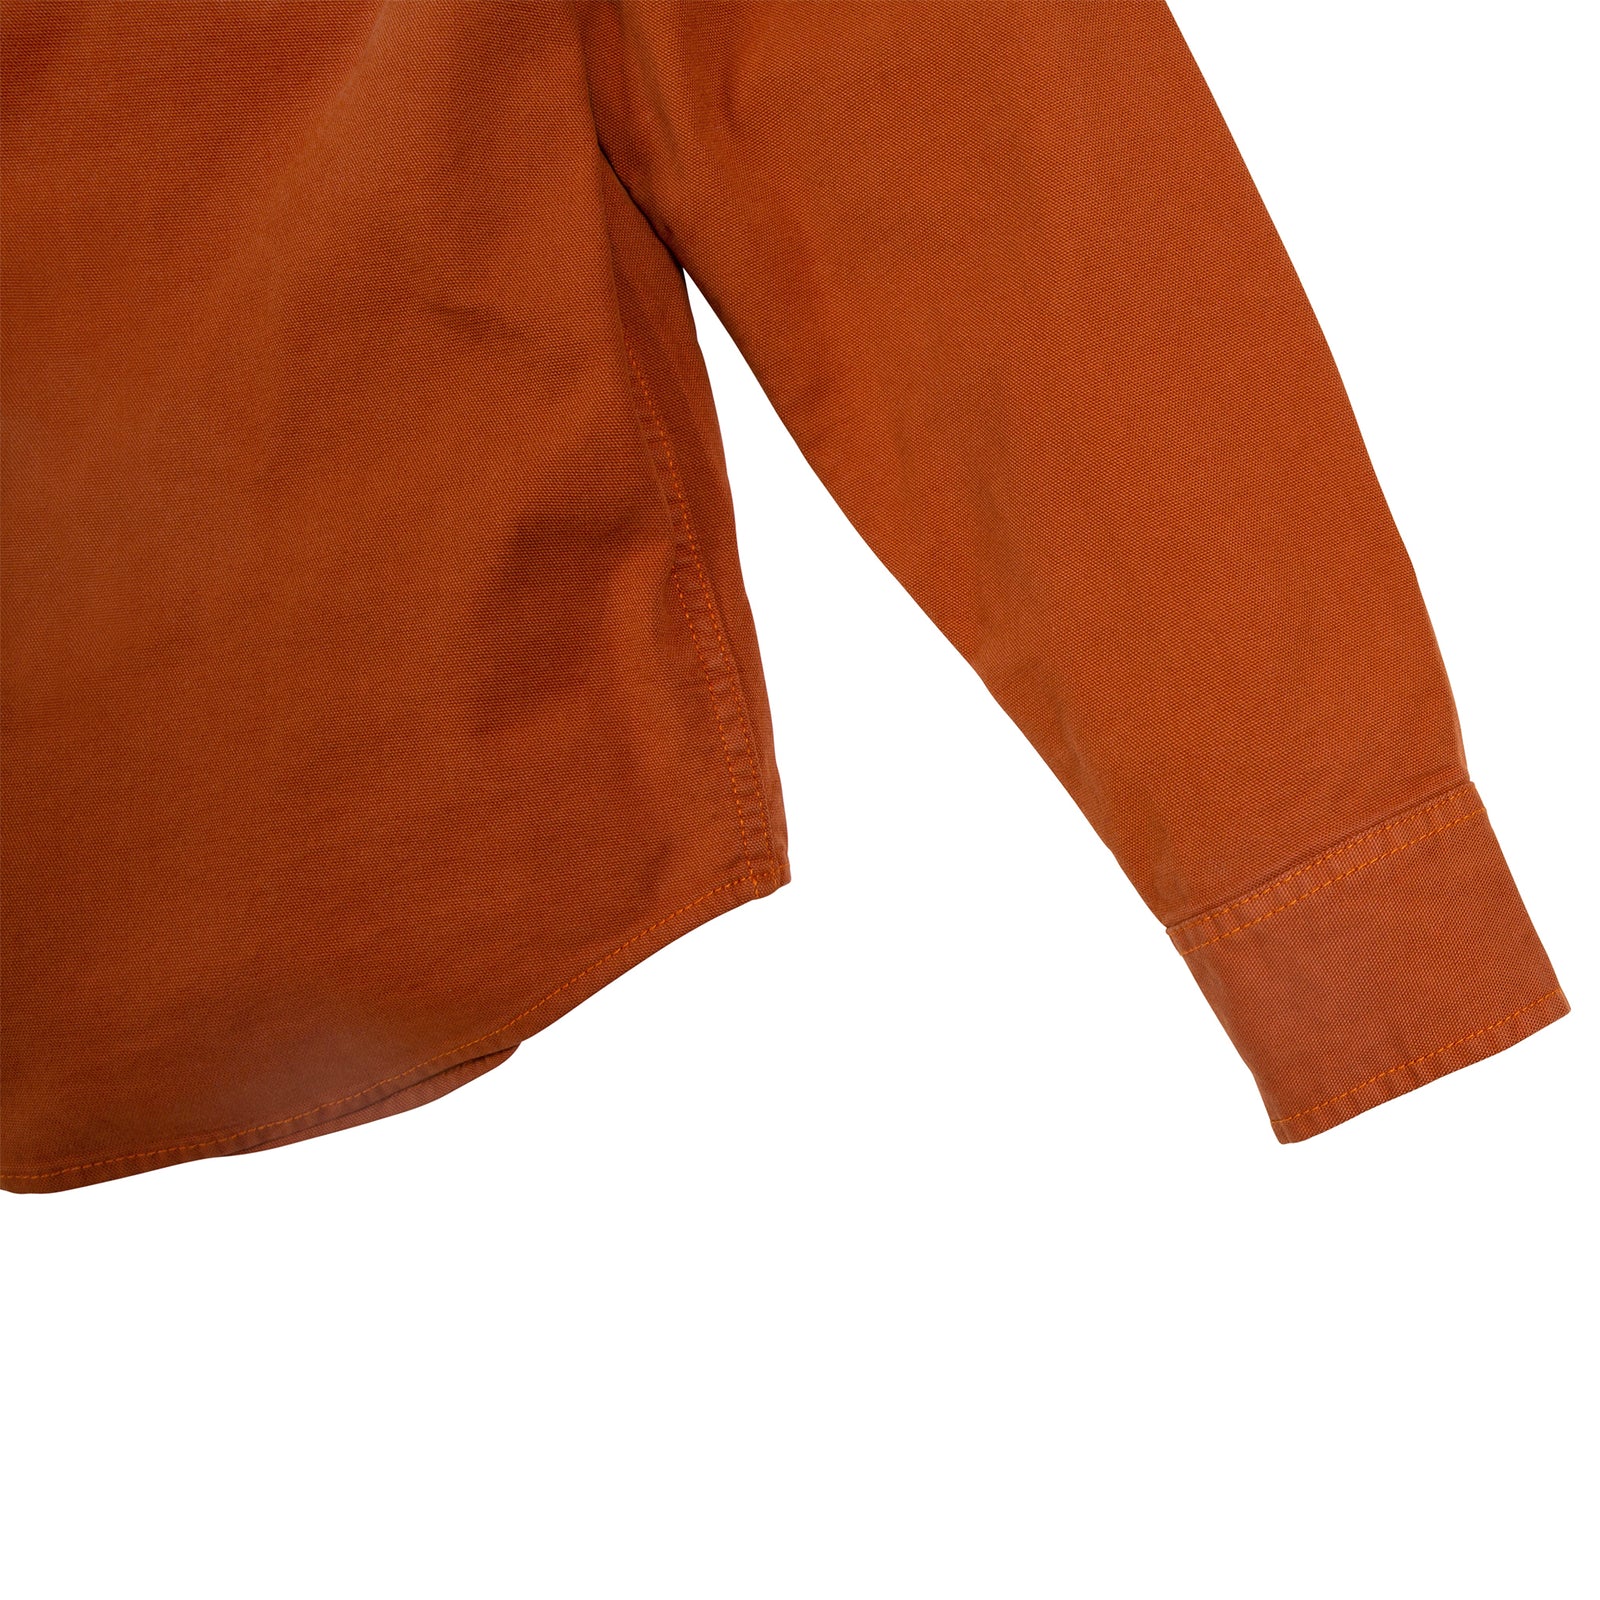 General detail shot of Topo Designs Women's Dirt Shirt in Brick orange showing sleeve cuff.